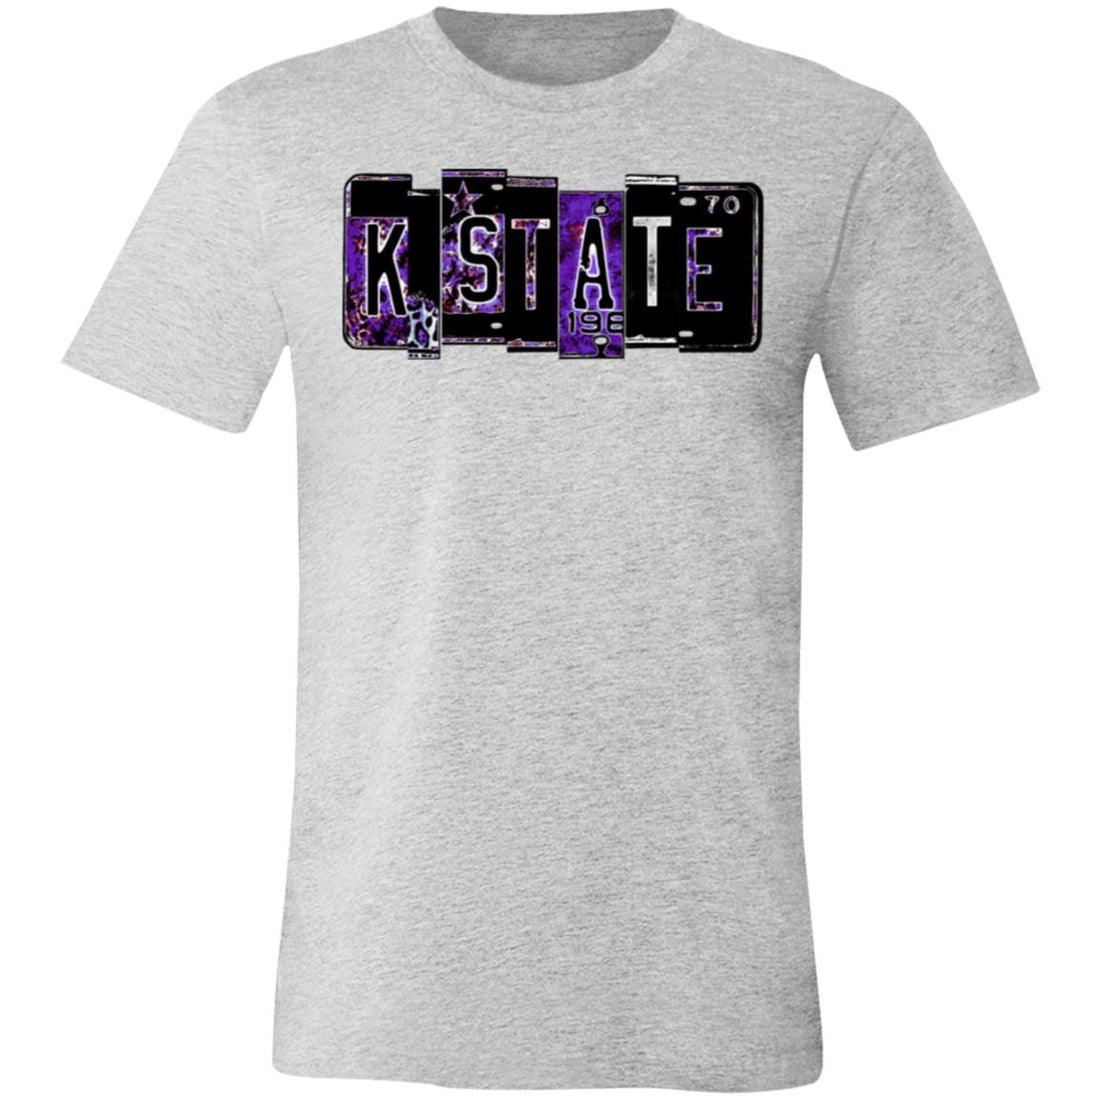 State Plates Short-Sleeve T-Shirt - T-Shirts - Positively Sassy - State Plates Short-Sleeve T-Shirt